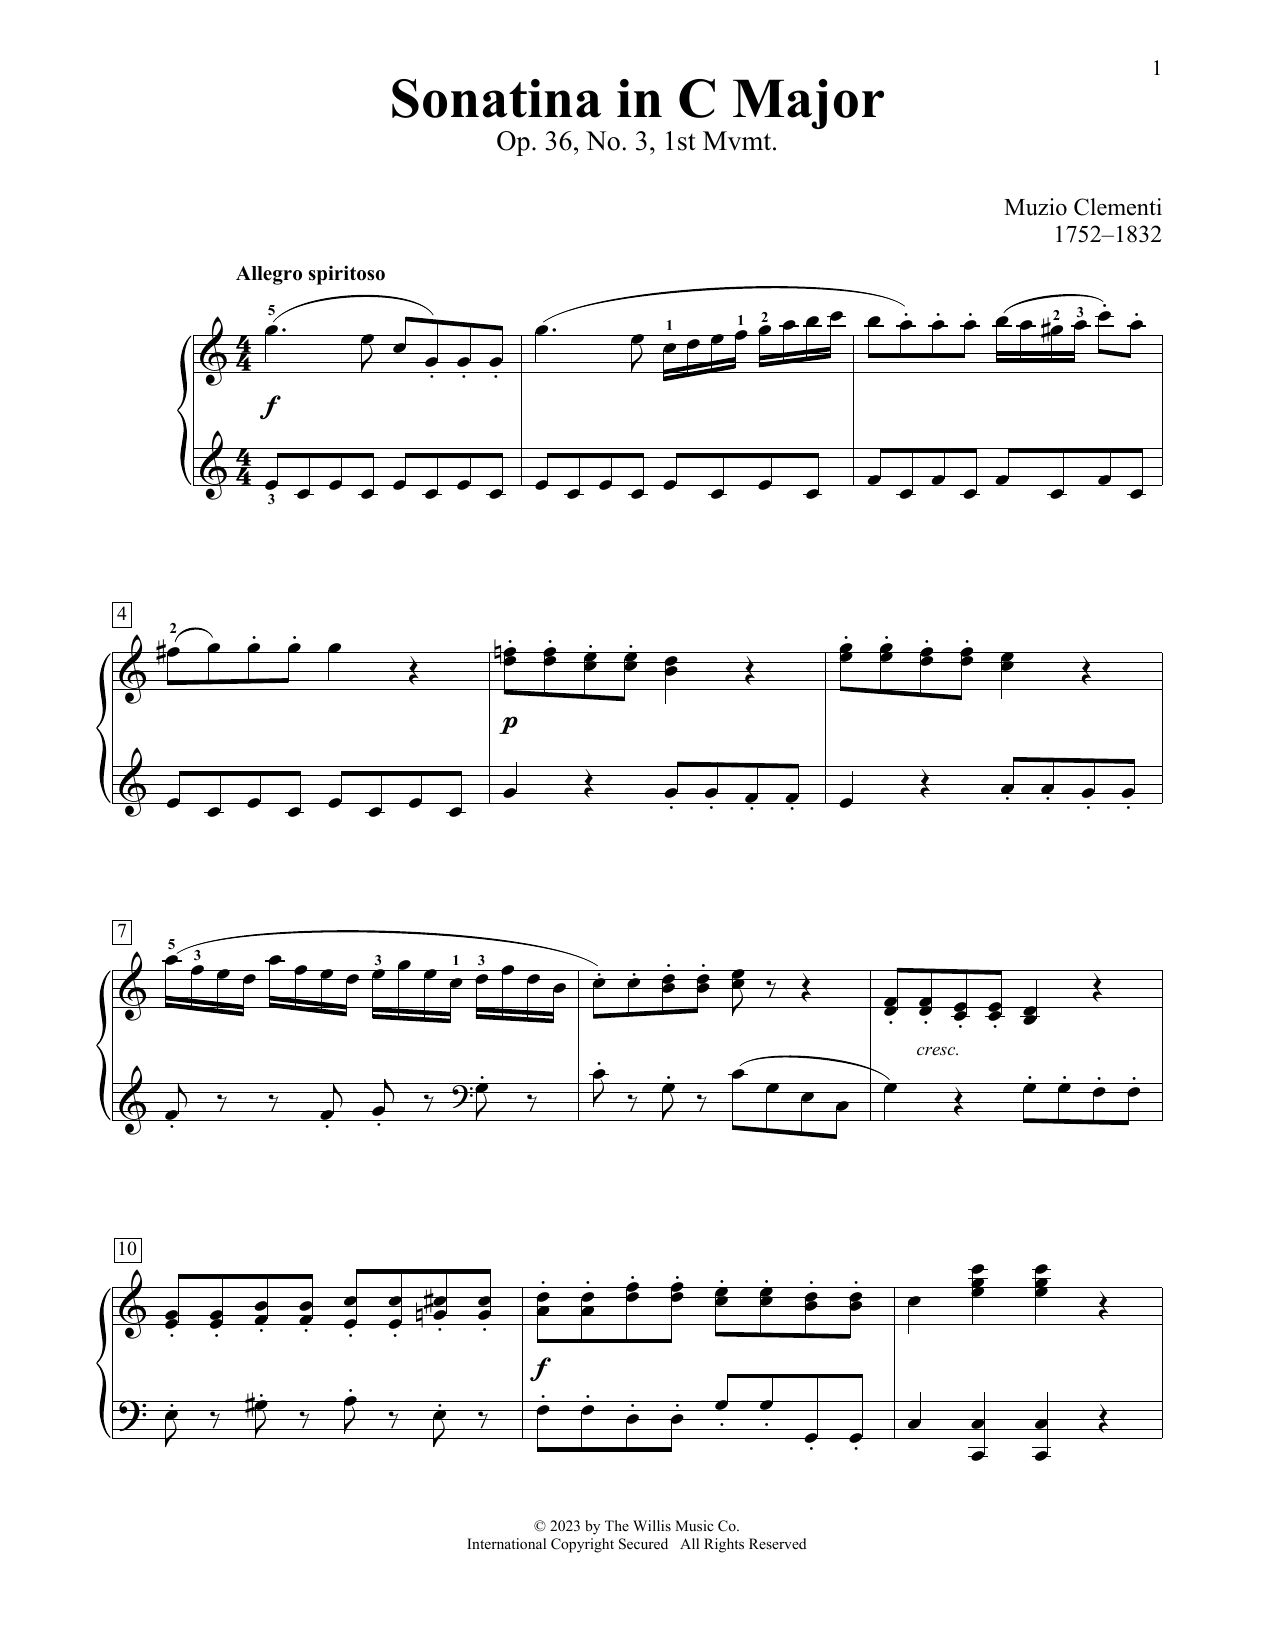 Muzio Clementi Sonatina In C Major, Op. 36, No. 3, 1st Mvmt sheet music notes printable PDF score